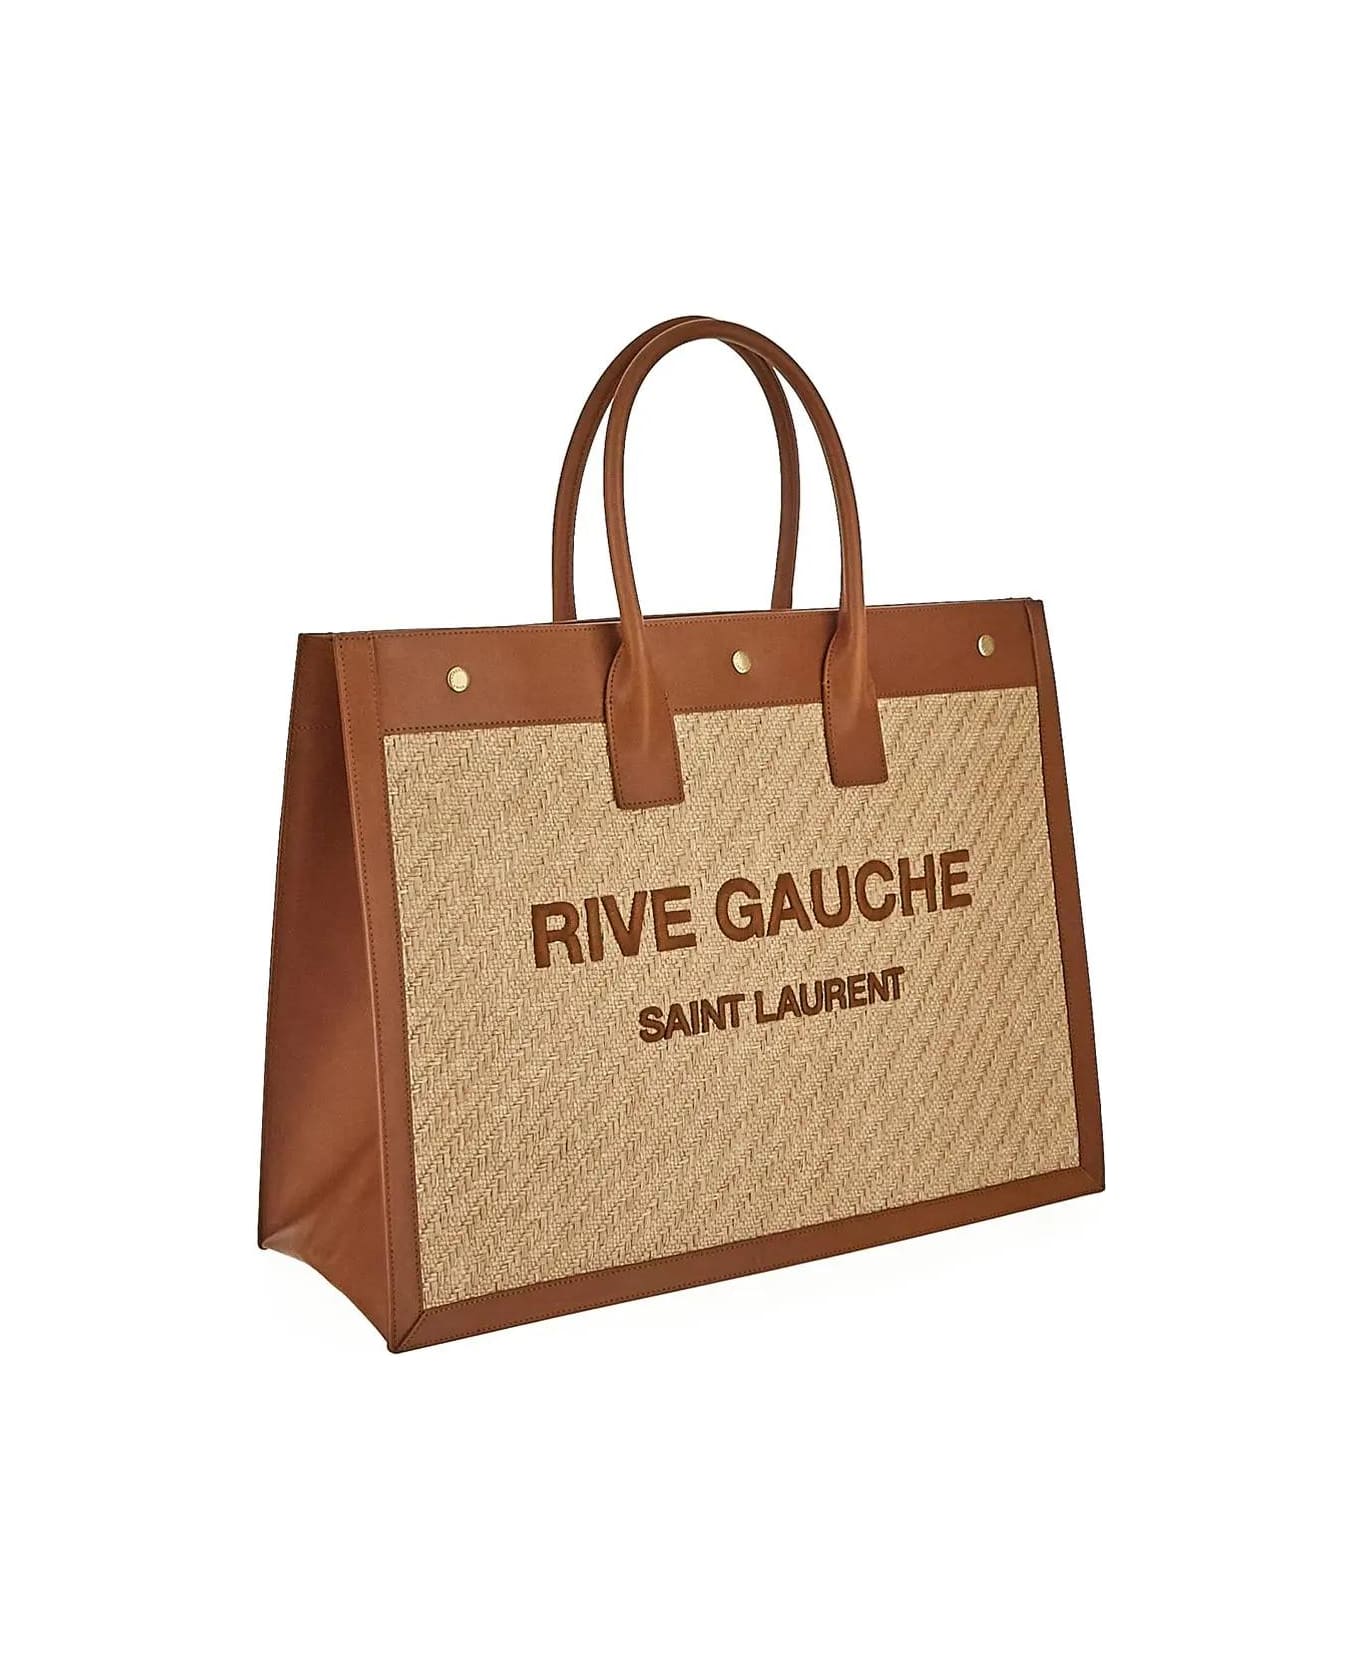 Saint Laurent Rive Gauche Tote Bag - Brown